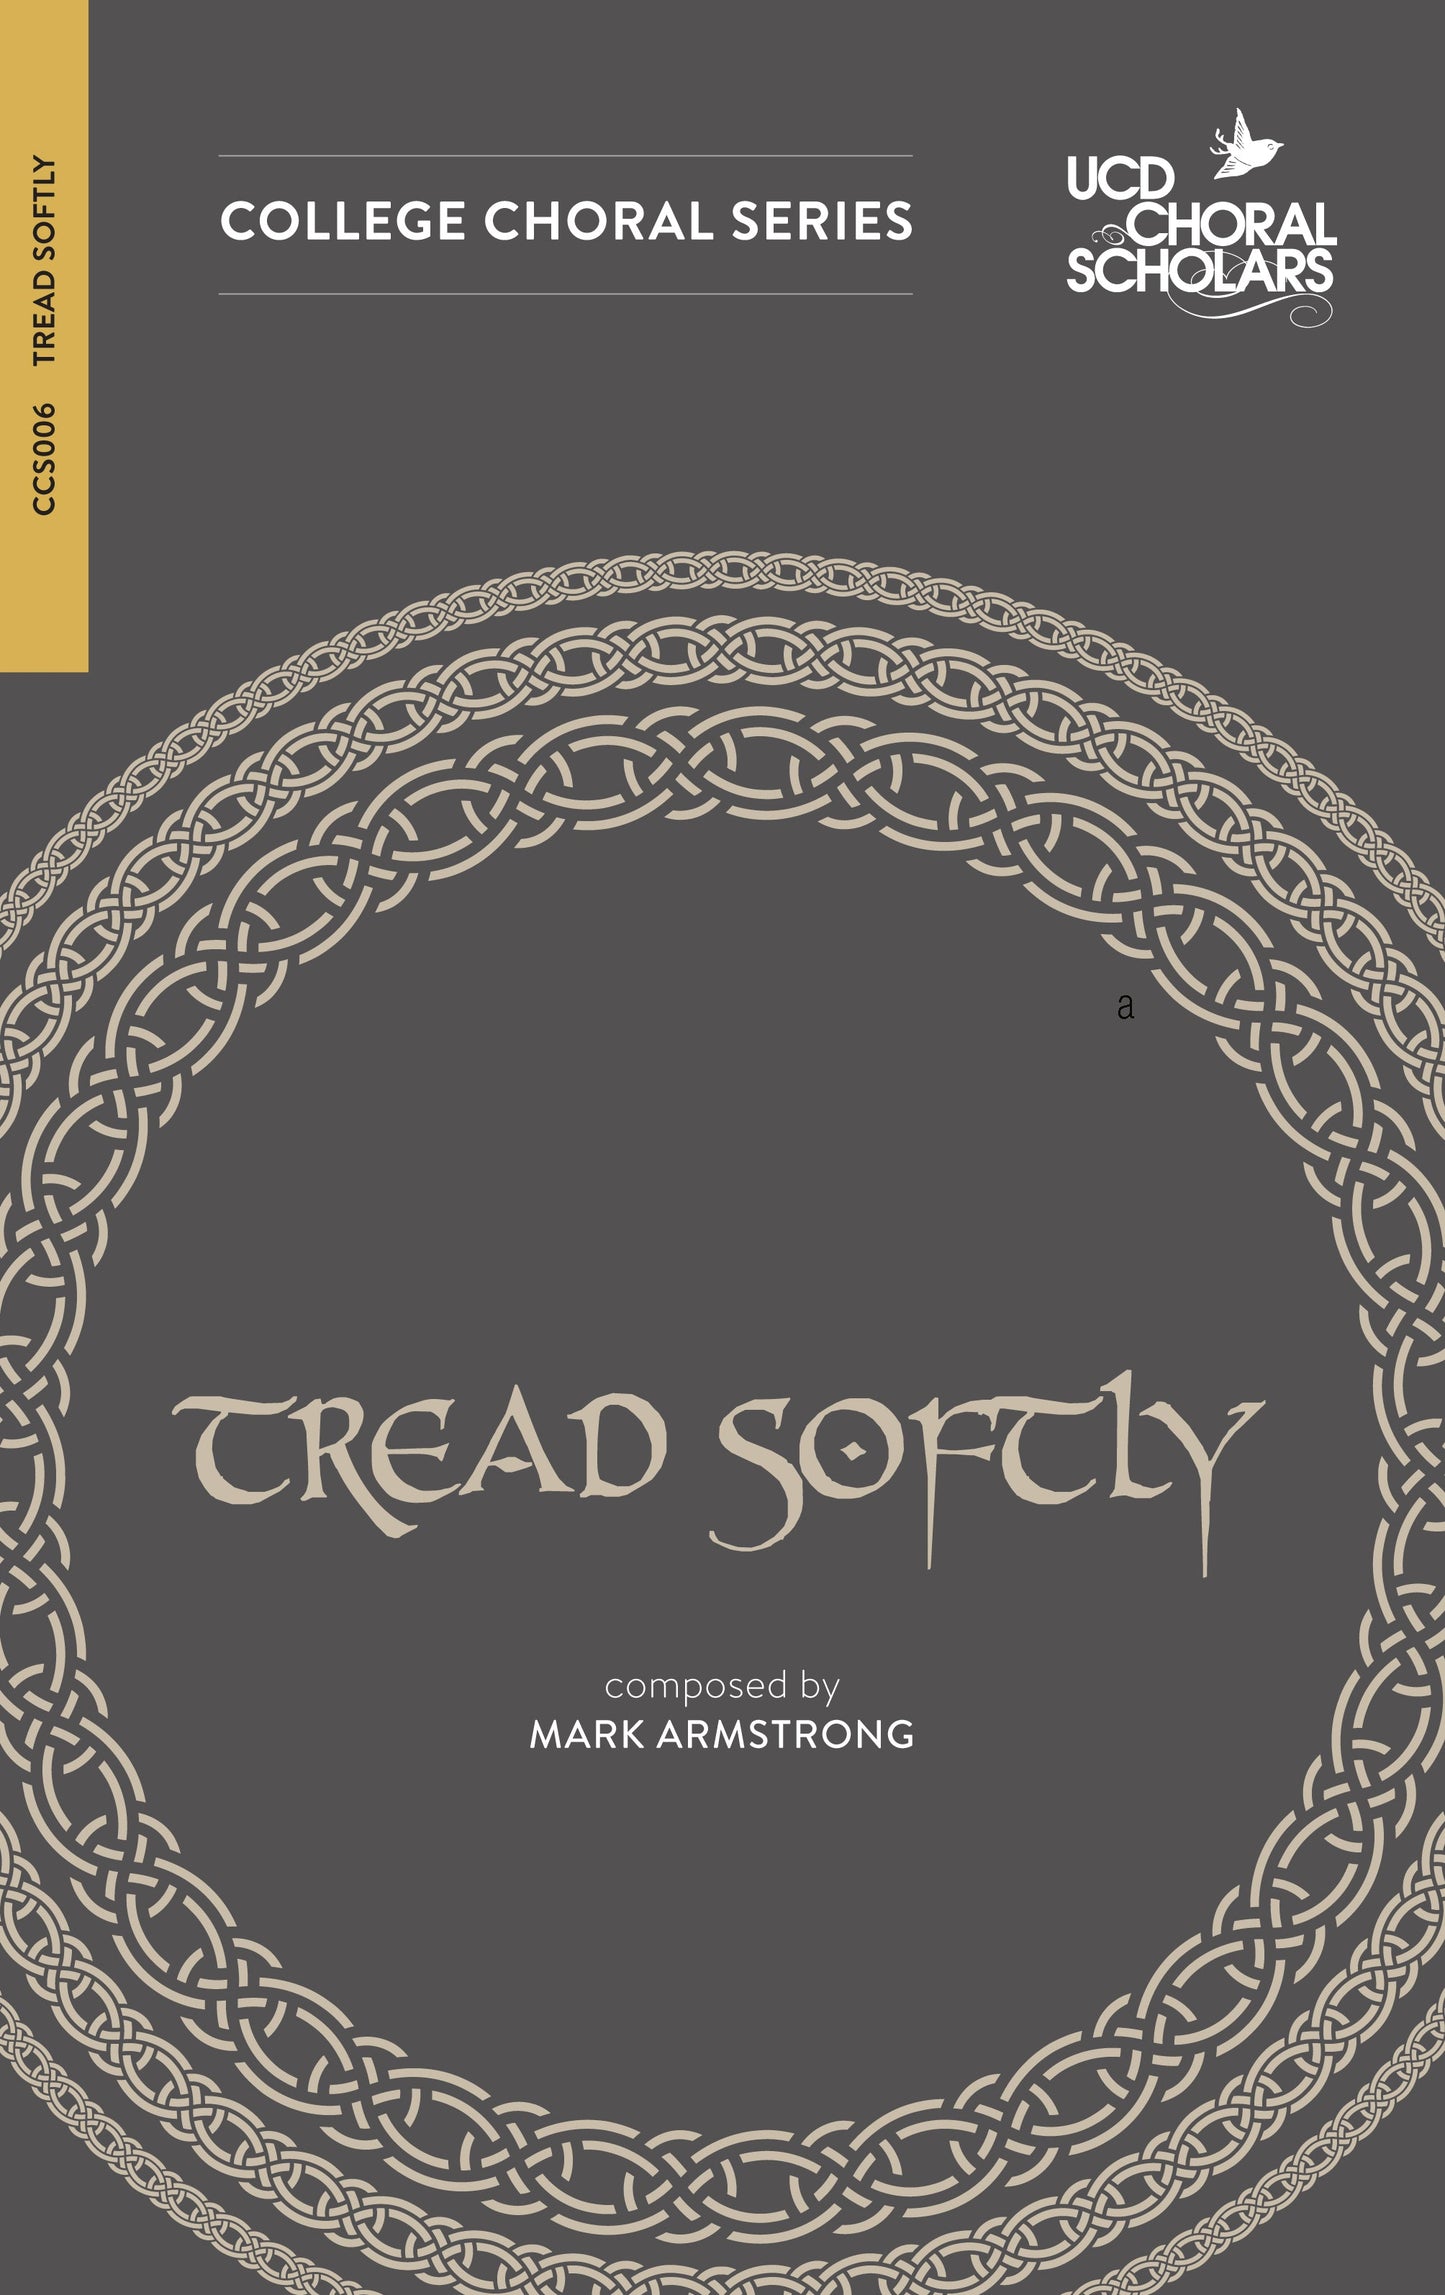 tread-softly-irish-choral-sheet-music